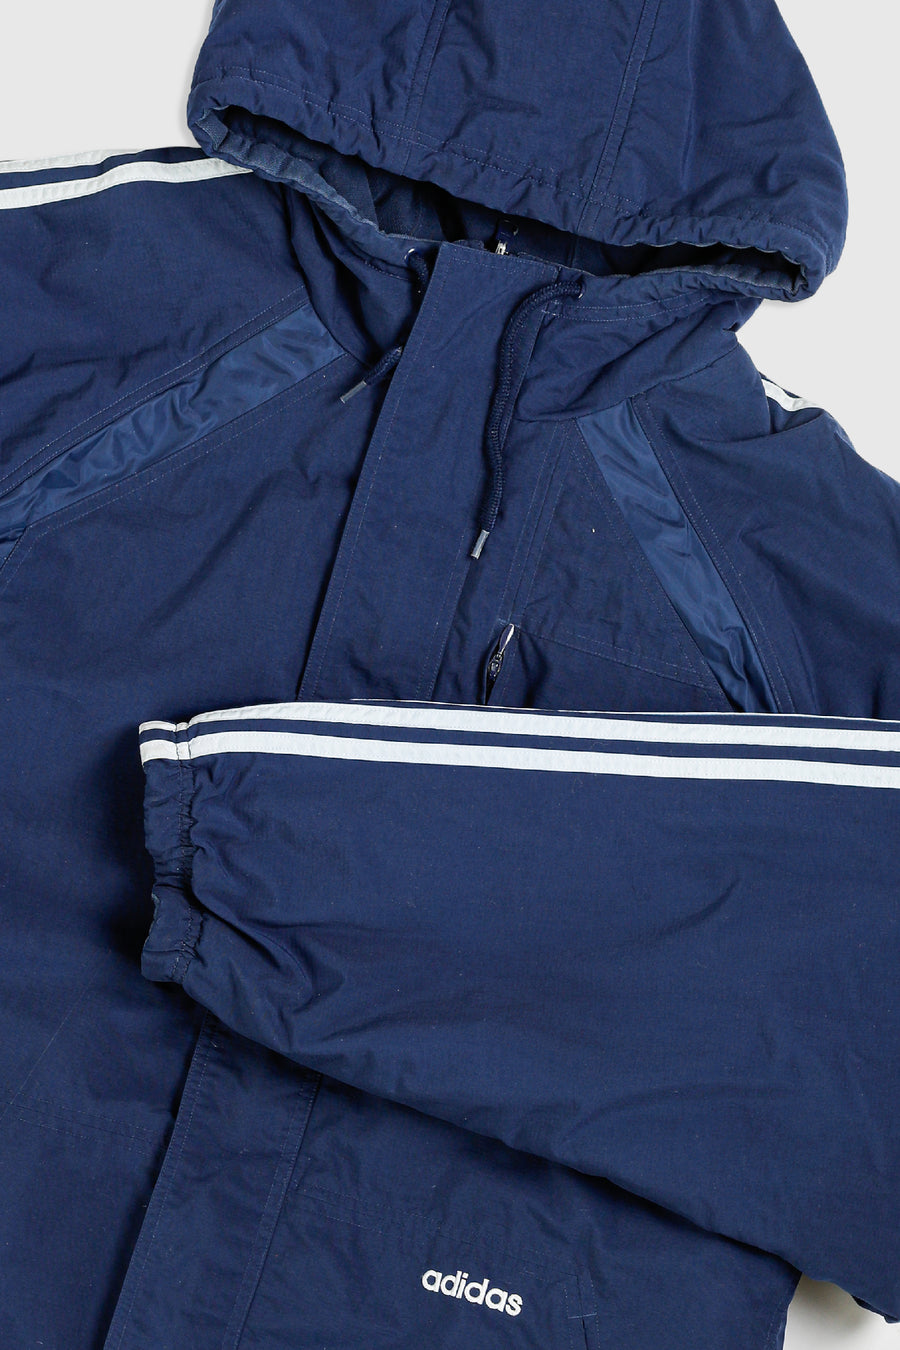 Vintage Reversible Adidas Windbreaker Jacket - XL